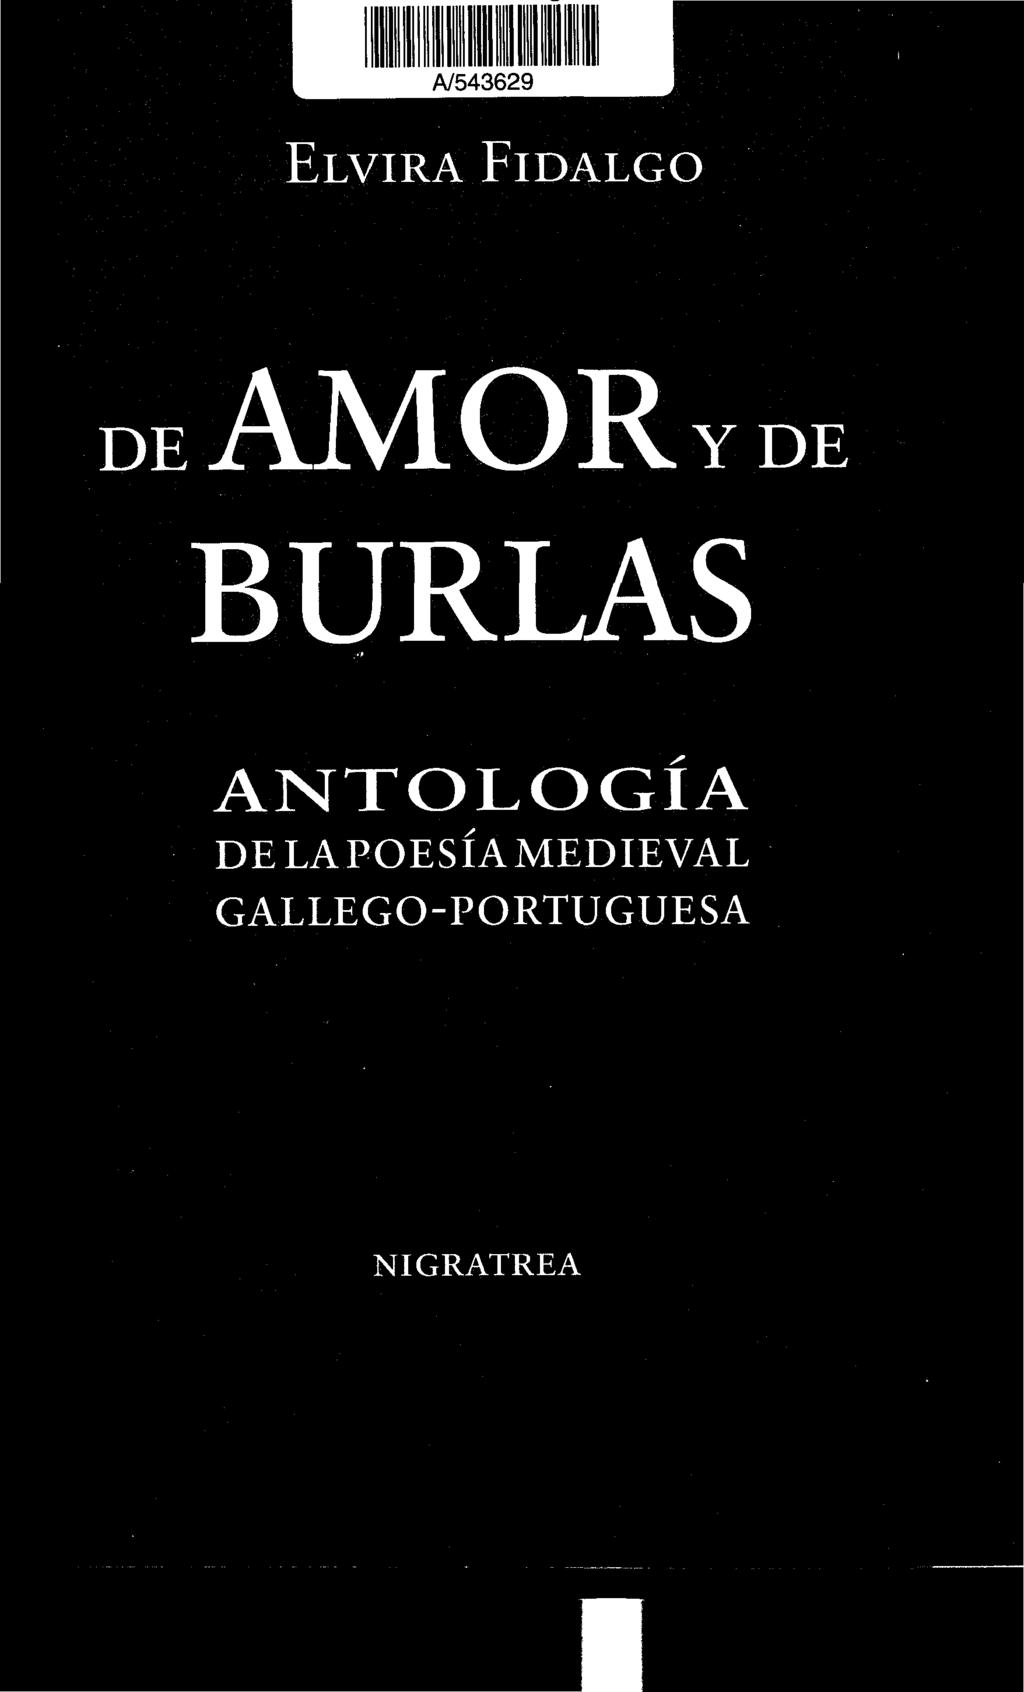 A/543629 ELVIRA FIDALGO AMORY BURLAS ANTOLOGÍA